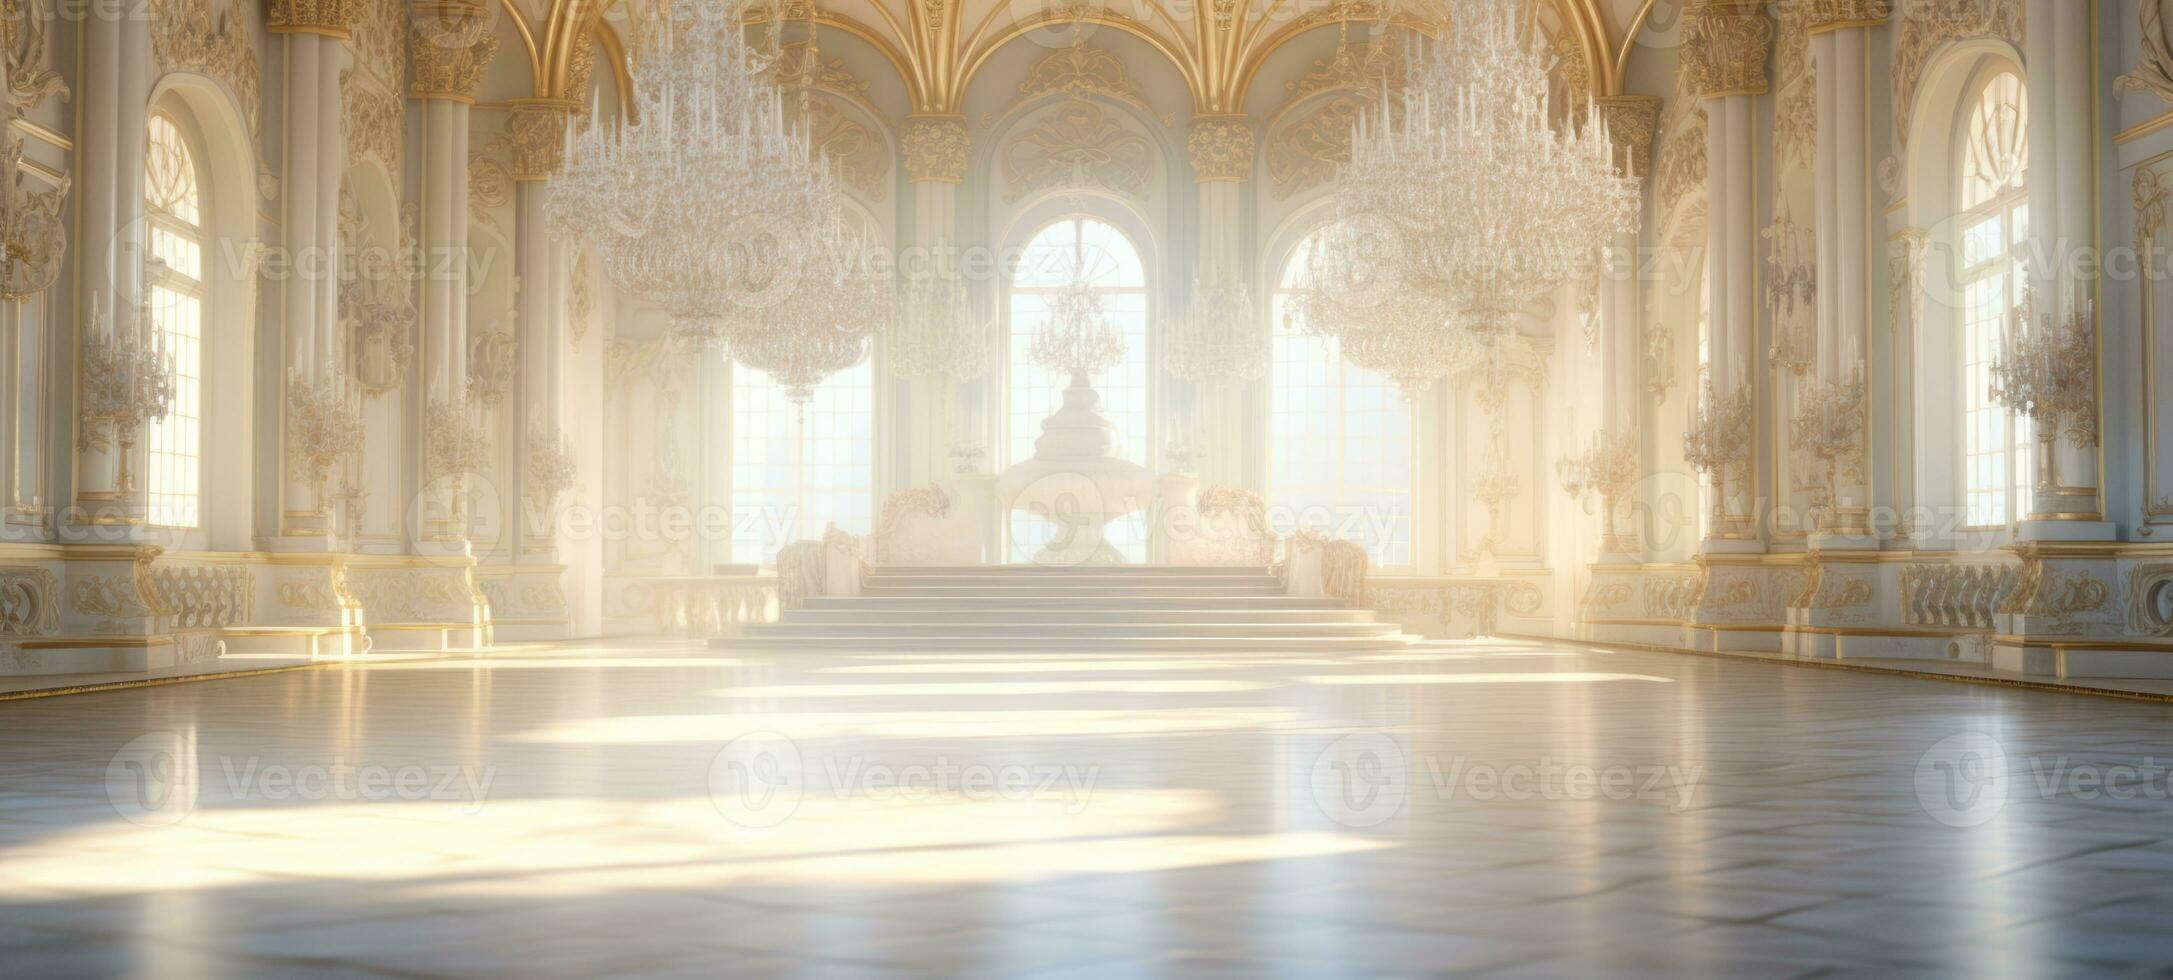 regal ballroom interior palace venue, ai photo